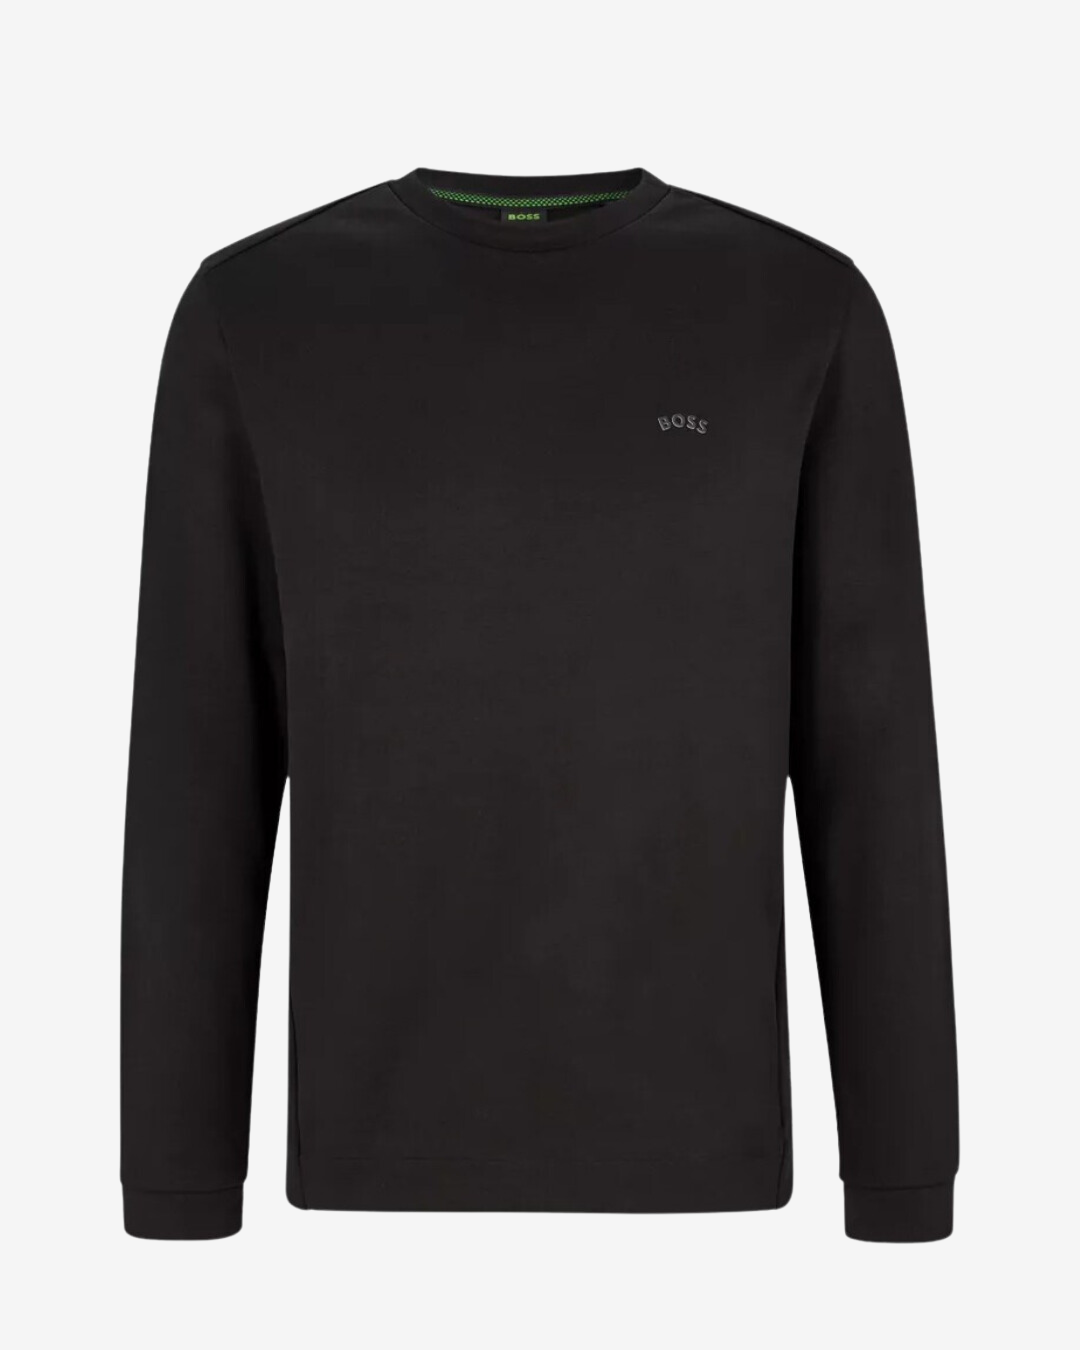 Se Hugo Boss Salbo sweatshirt - Sort - Str. 3XL - Modish.dk hos Modish.dk